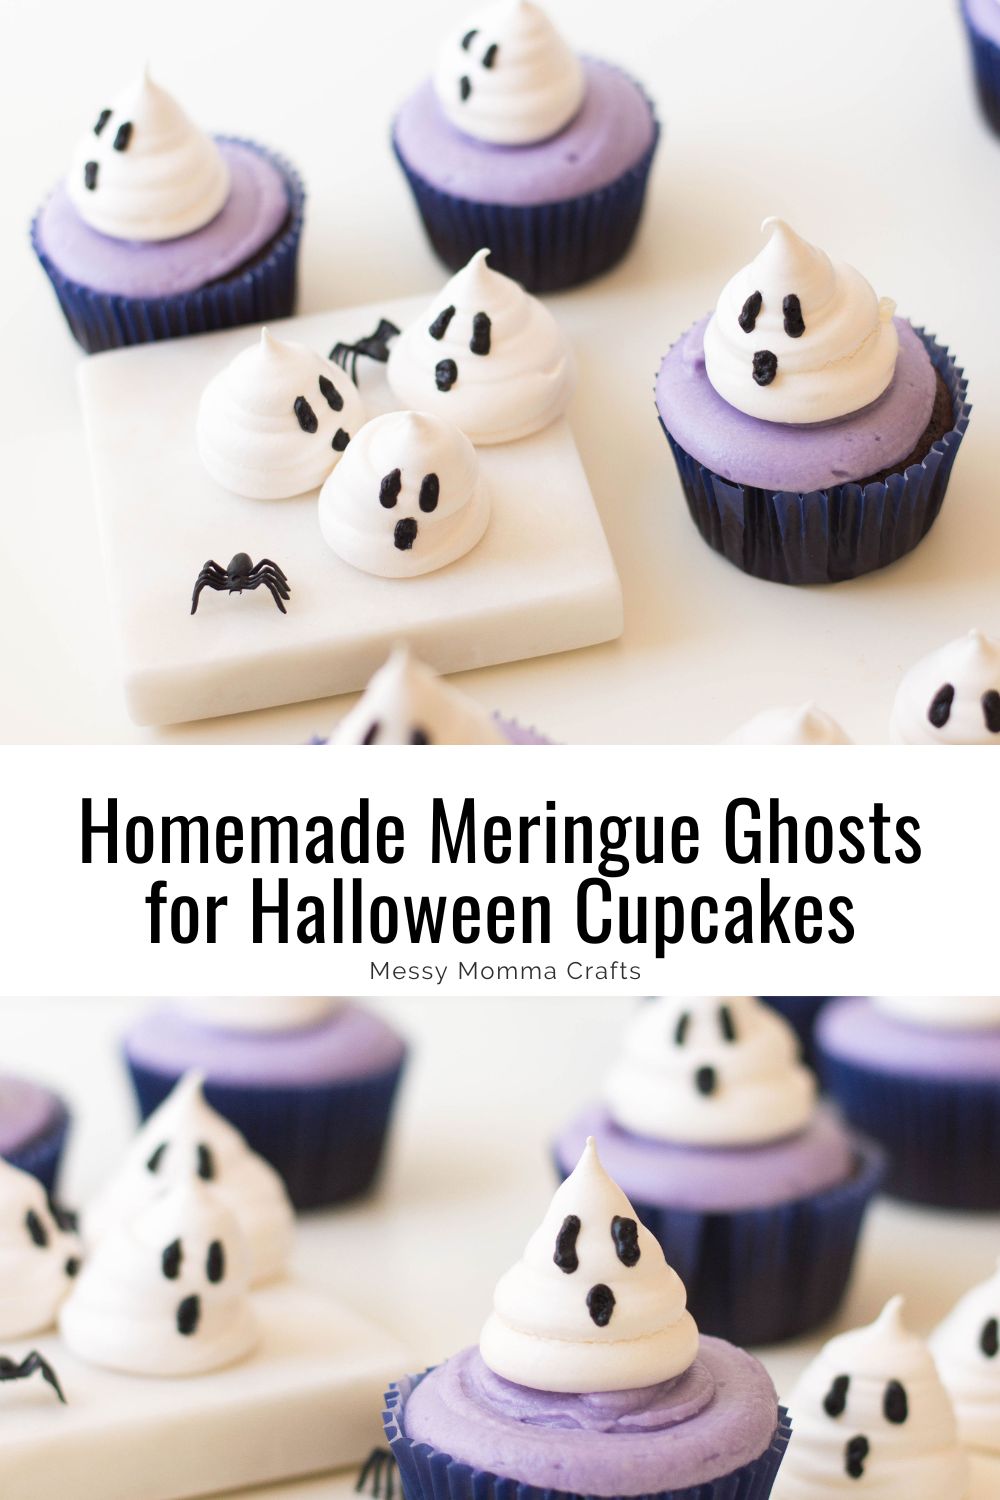 Homemade meringue ghosts for Halloween cupcakes.